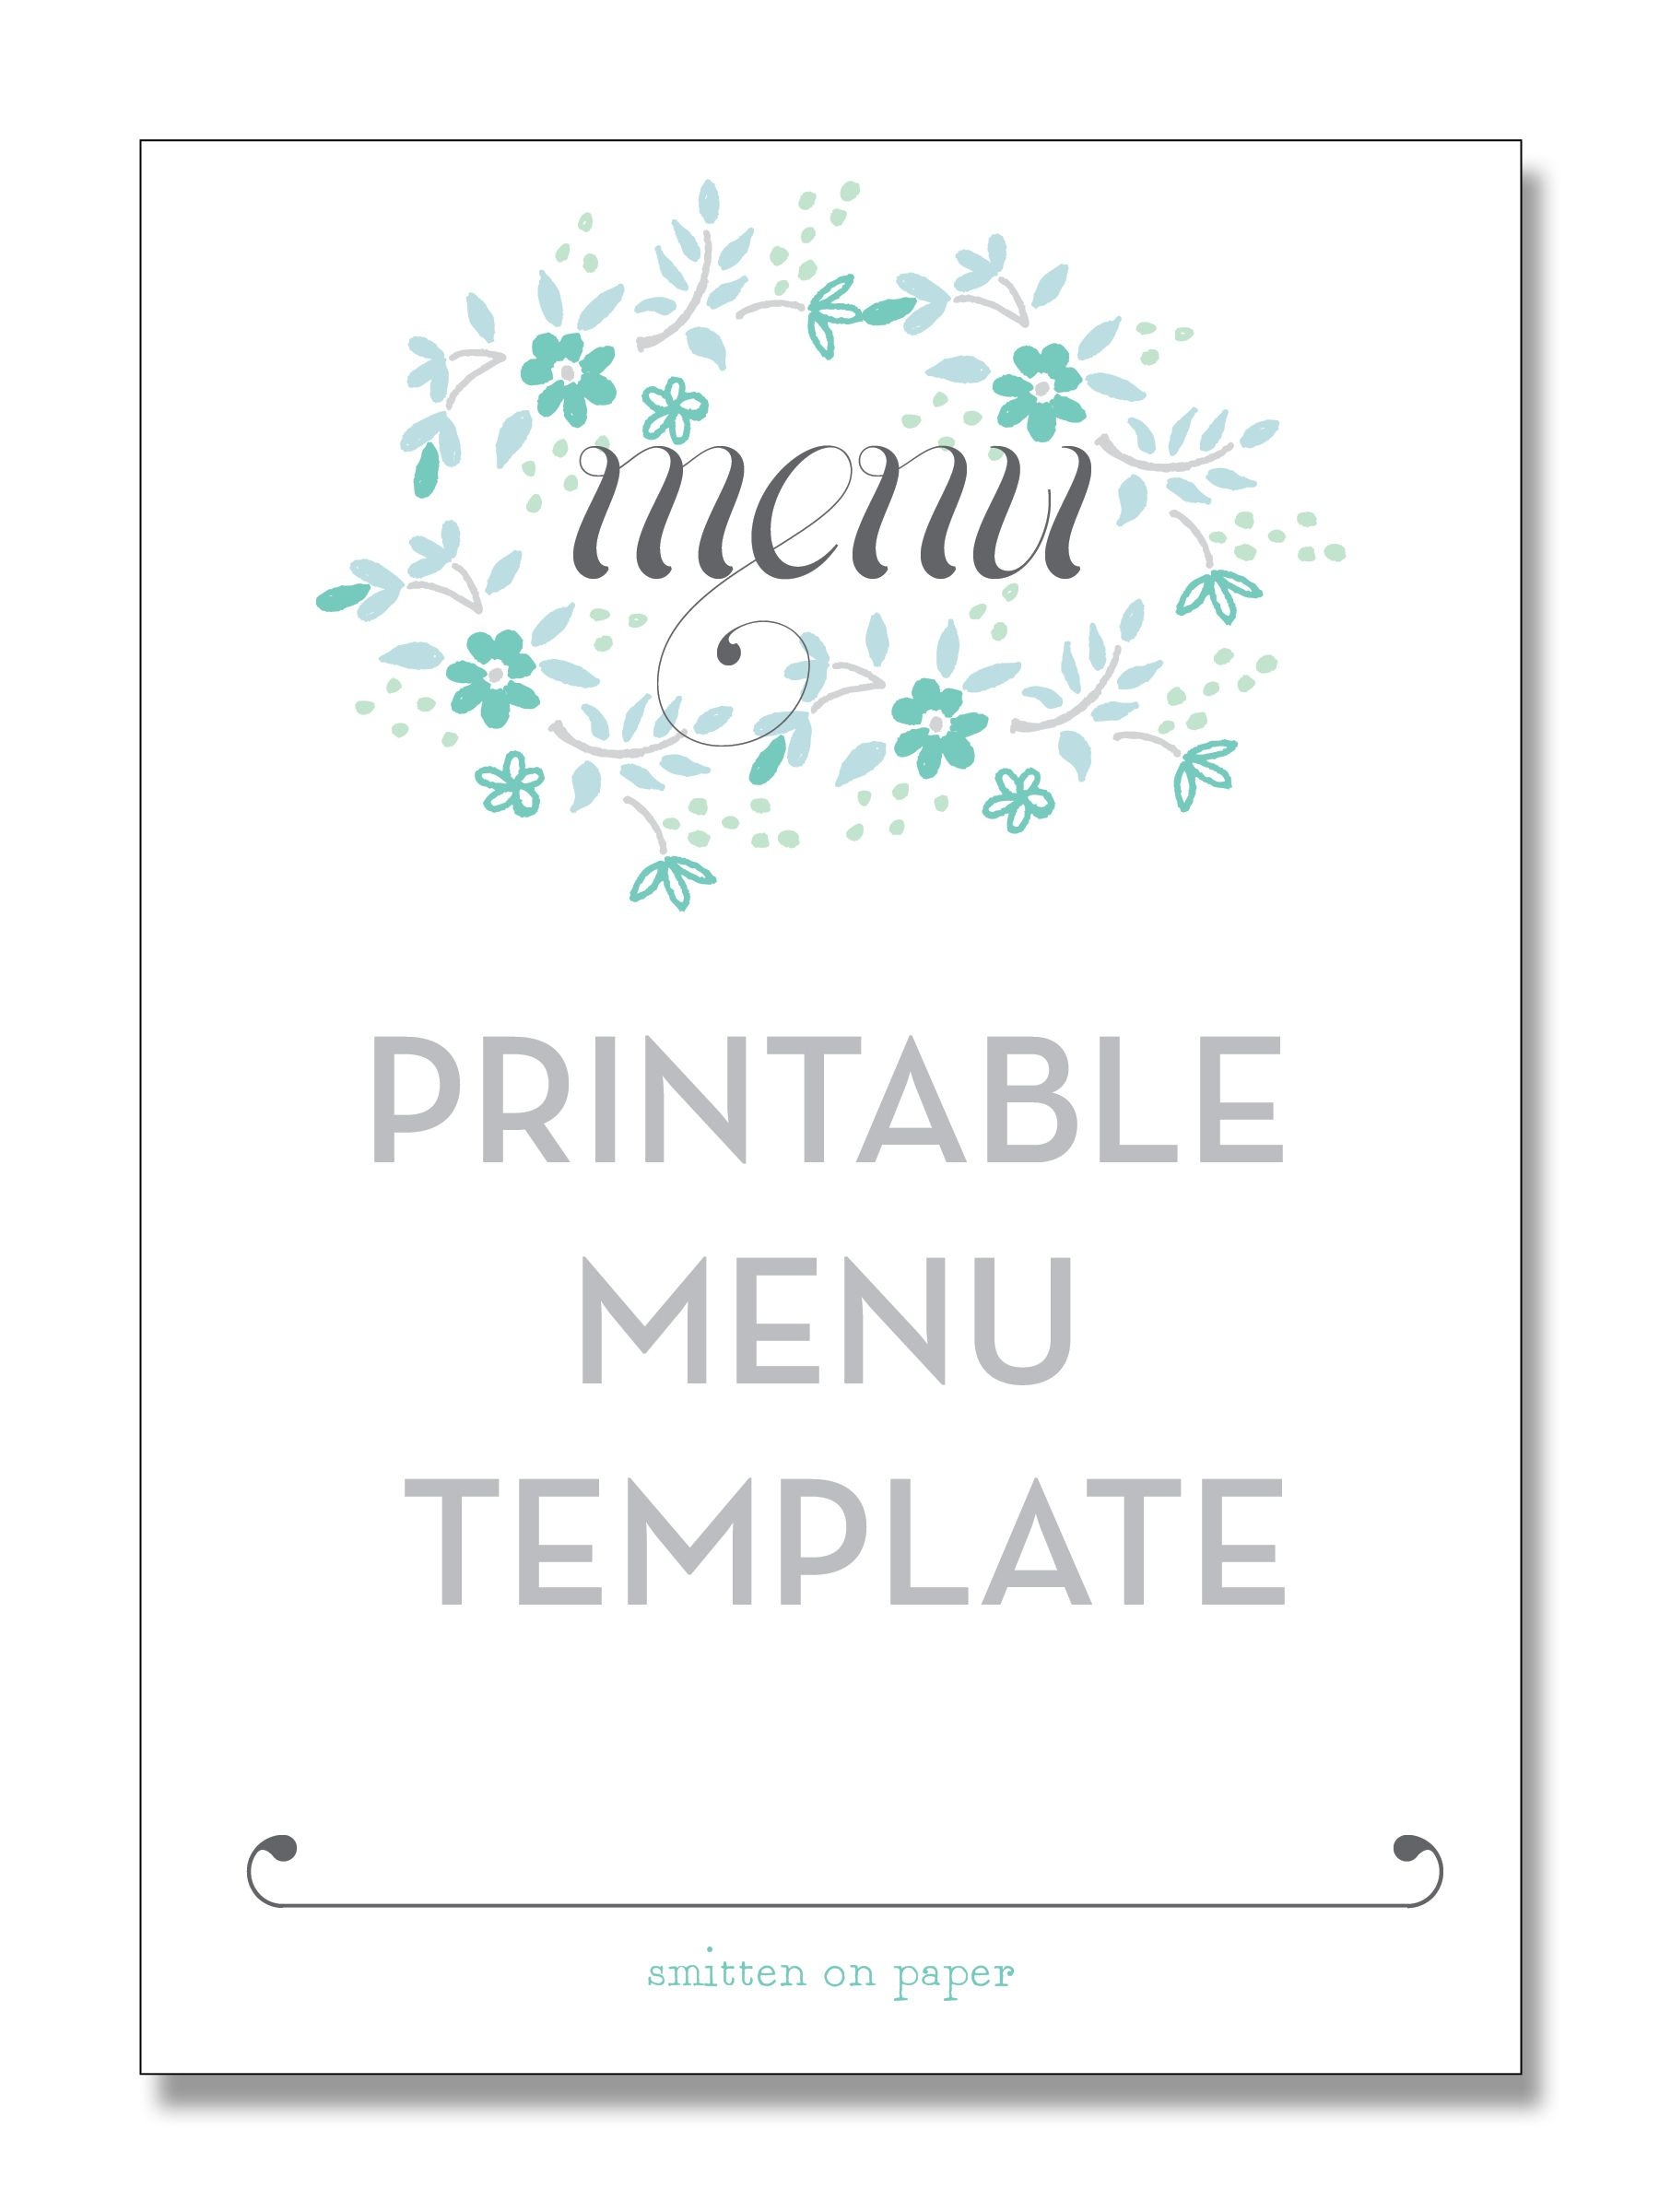 Free Printable Menu Template | Room Surf - Free Printable Restaurant Menu Templates